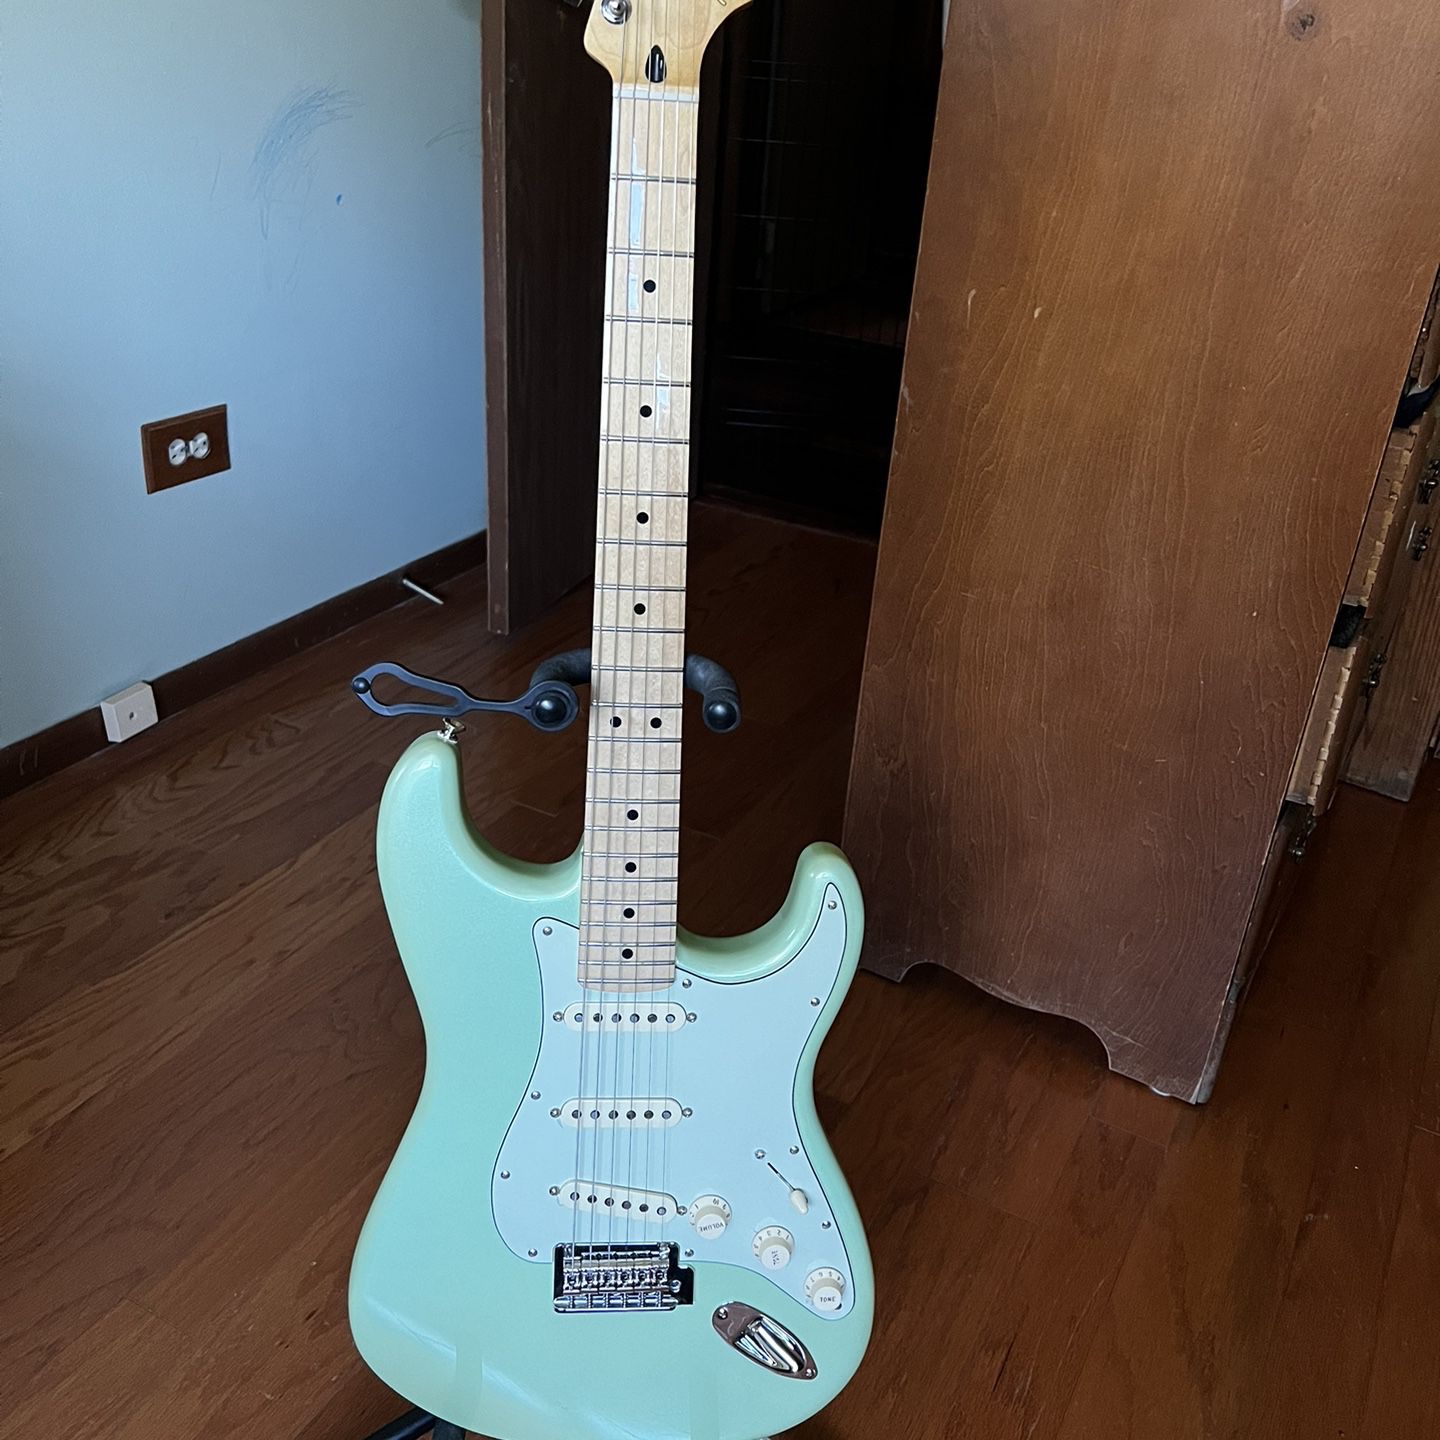 Fender Stratocaster Player Series 